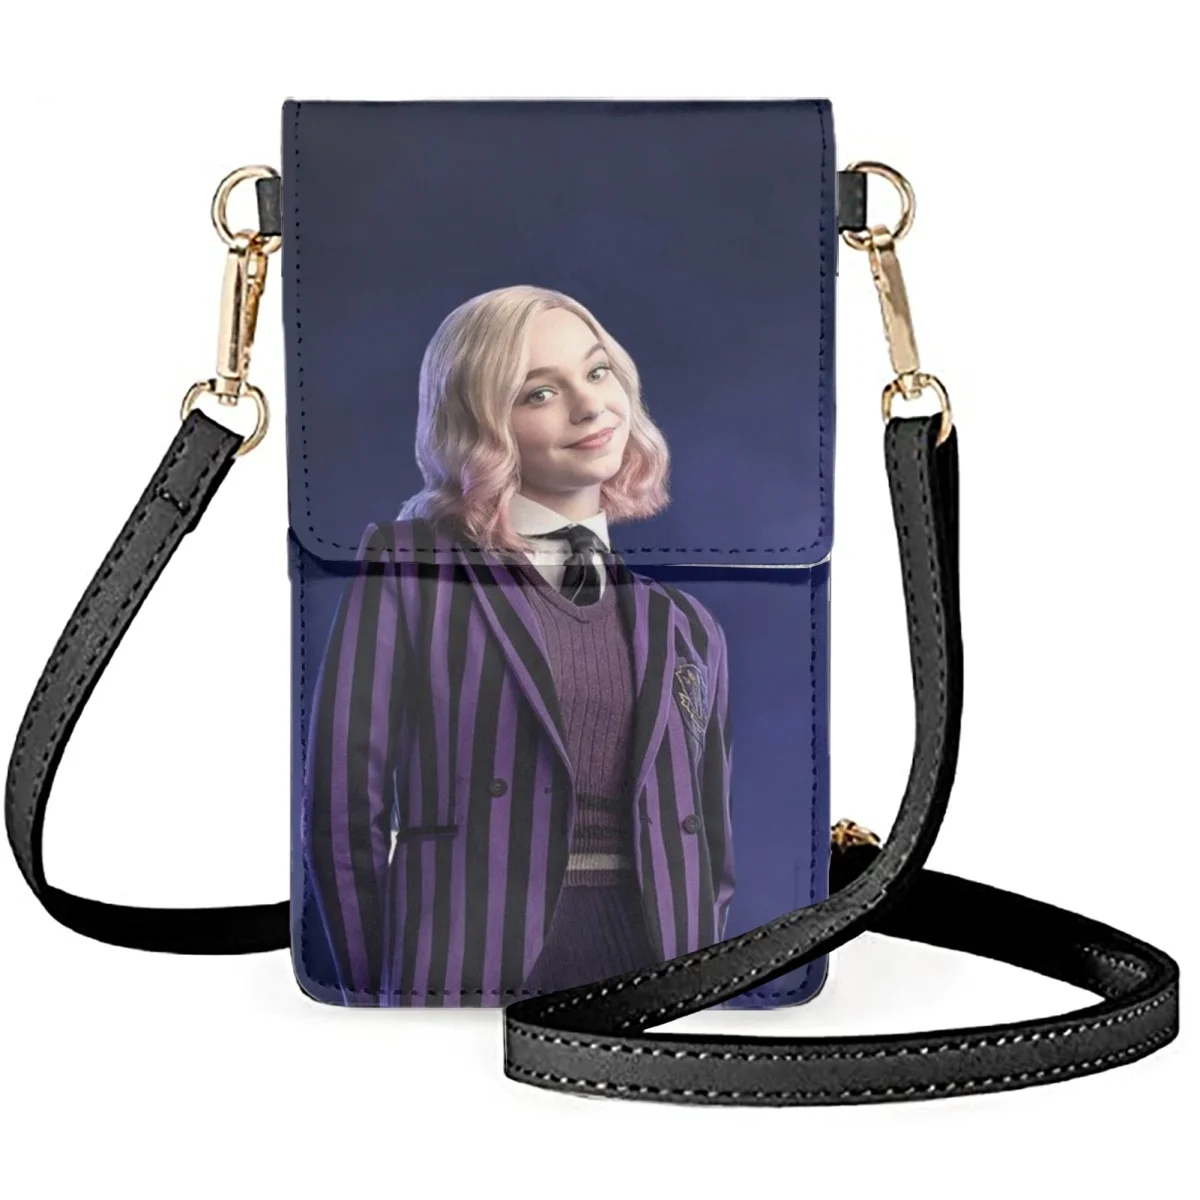 

FORUDESIGNS Nevermore Academy Lady Cell Phone Bag Protect Cellphone Pretty Enid Flip Satchel Girls Versatile Storage Bag Makeup